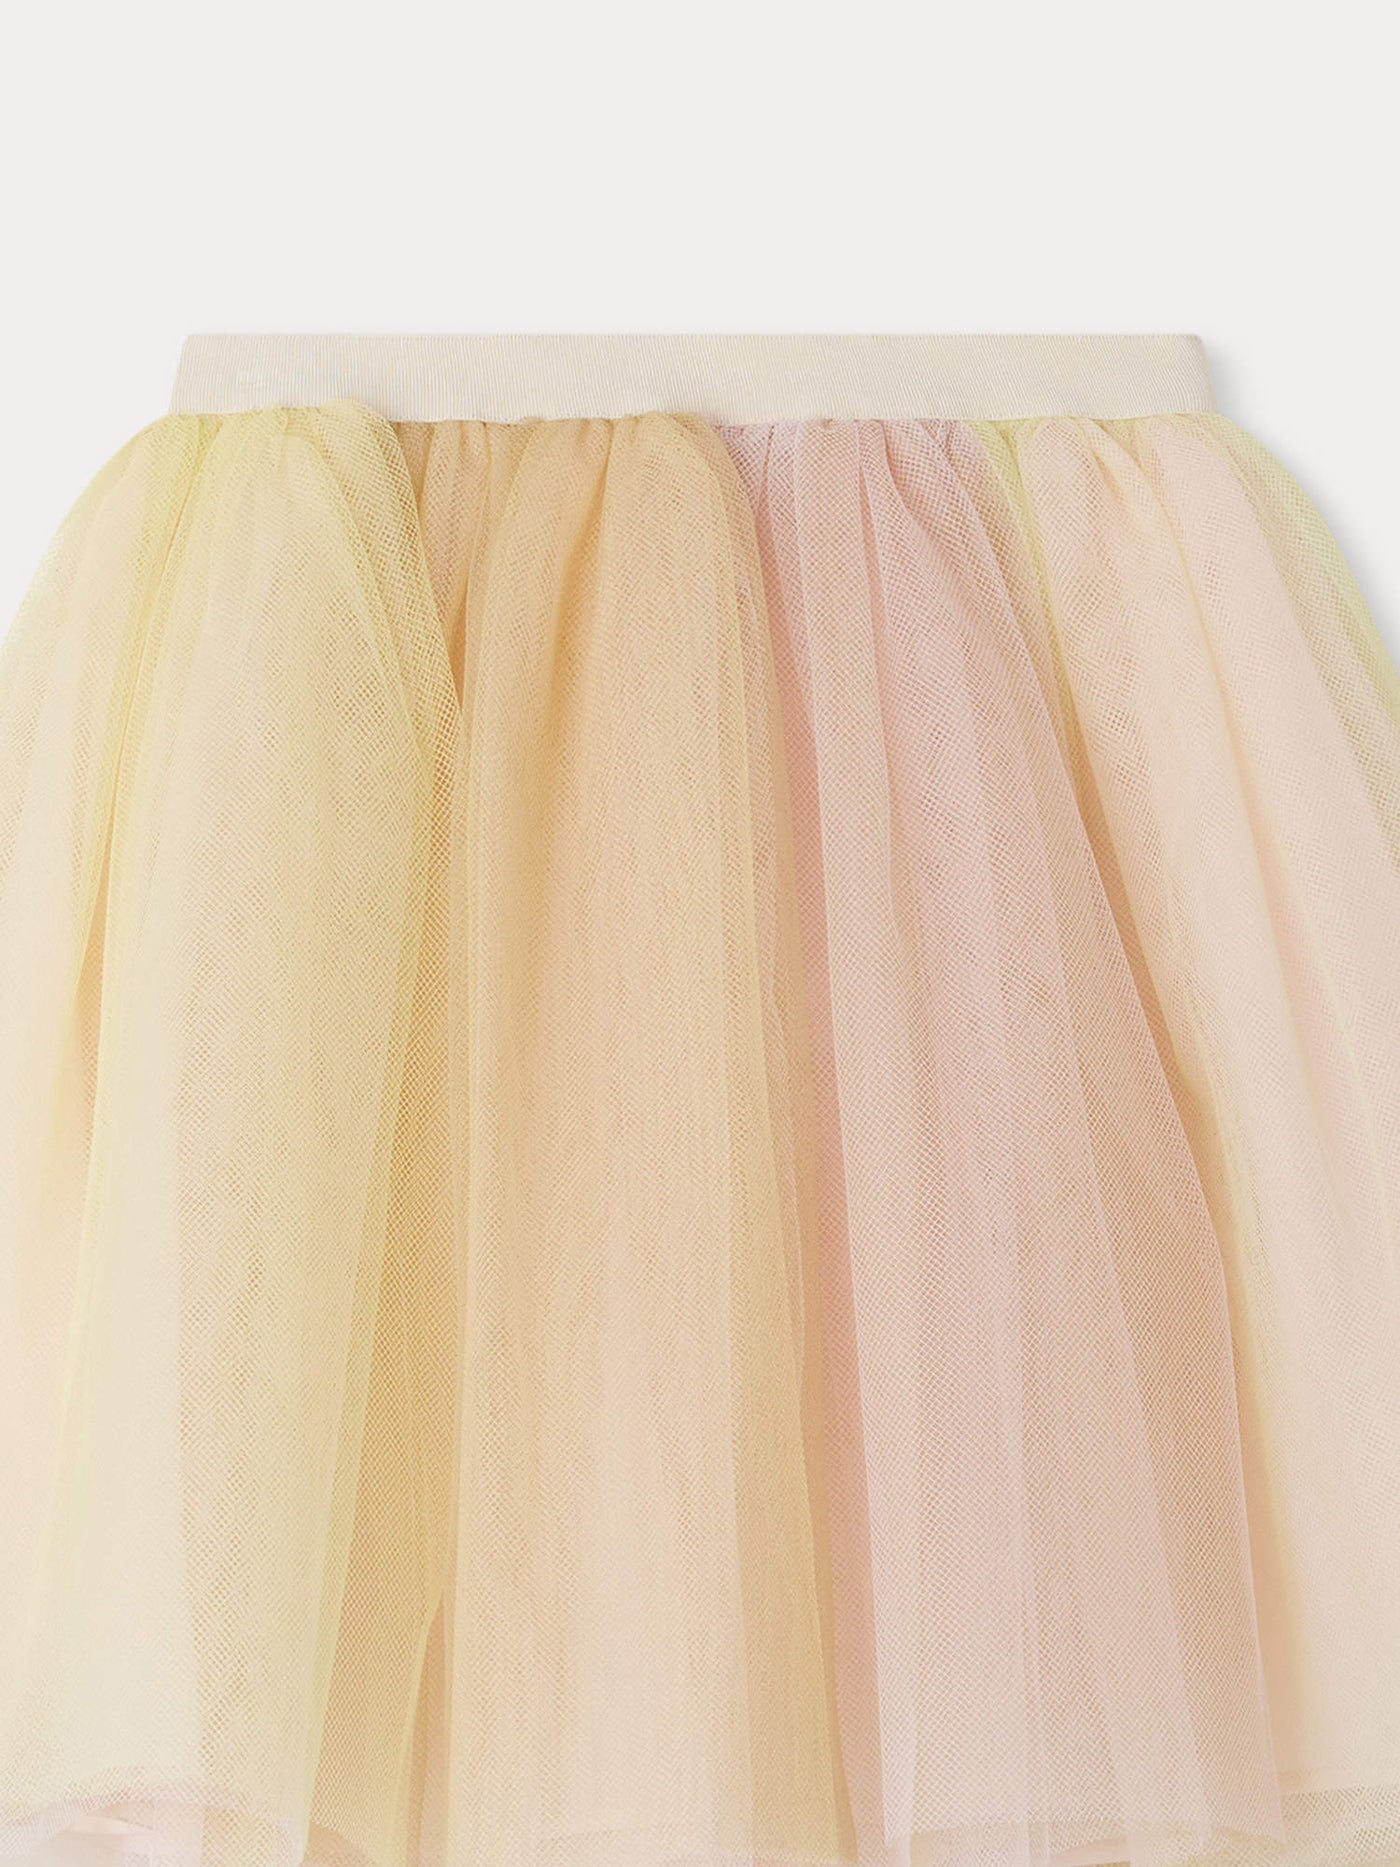 Charm Skirt multicolored